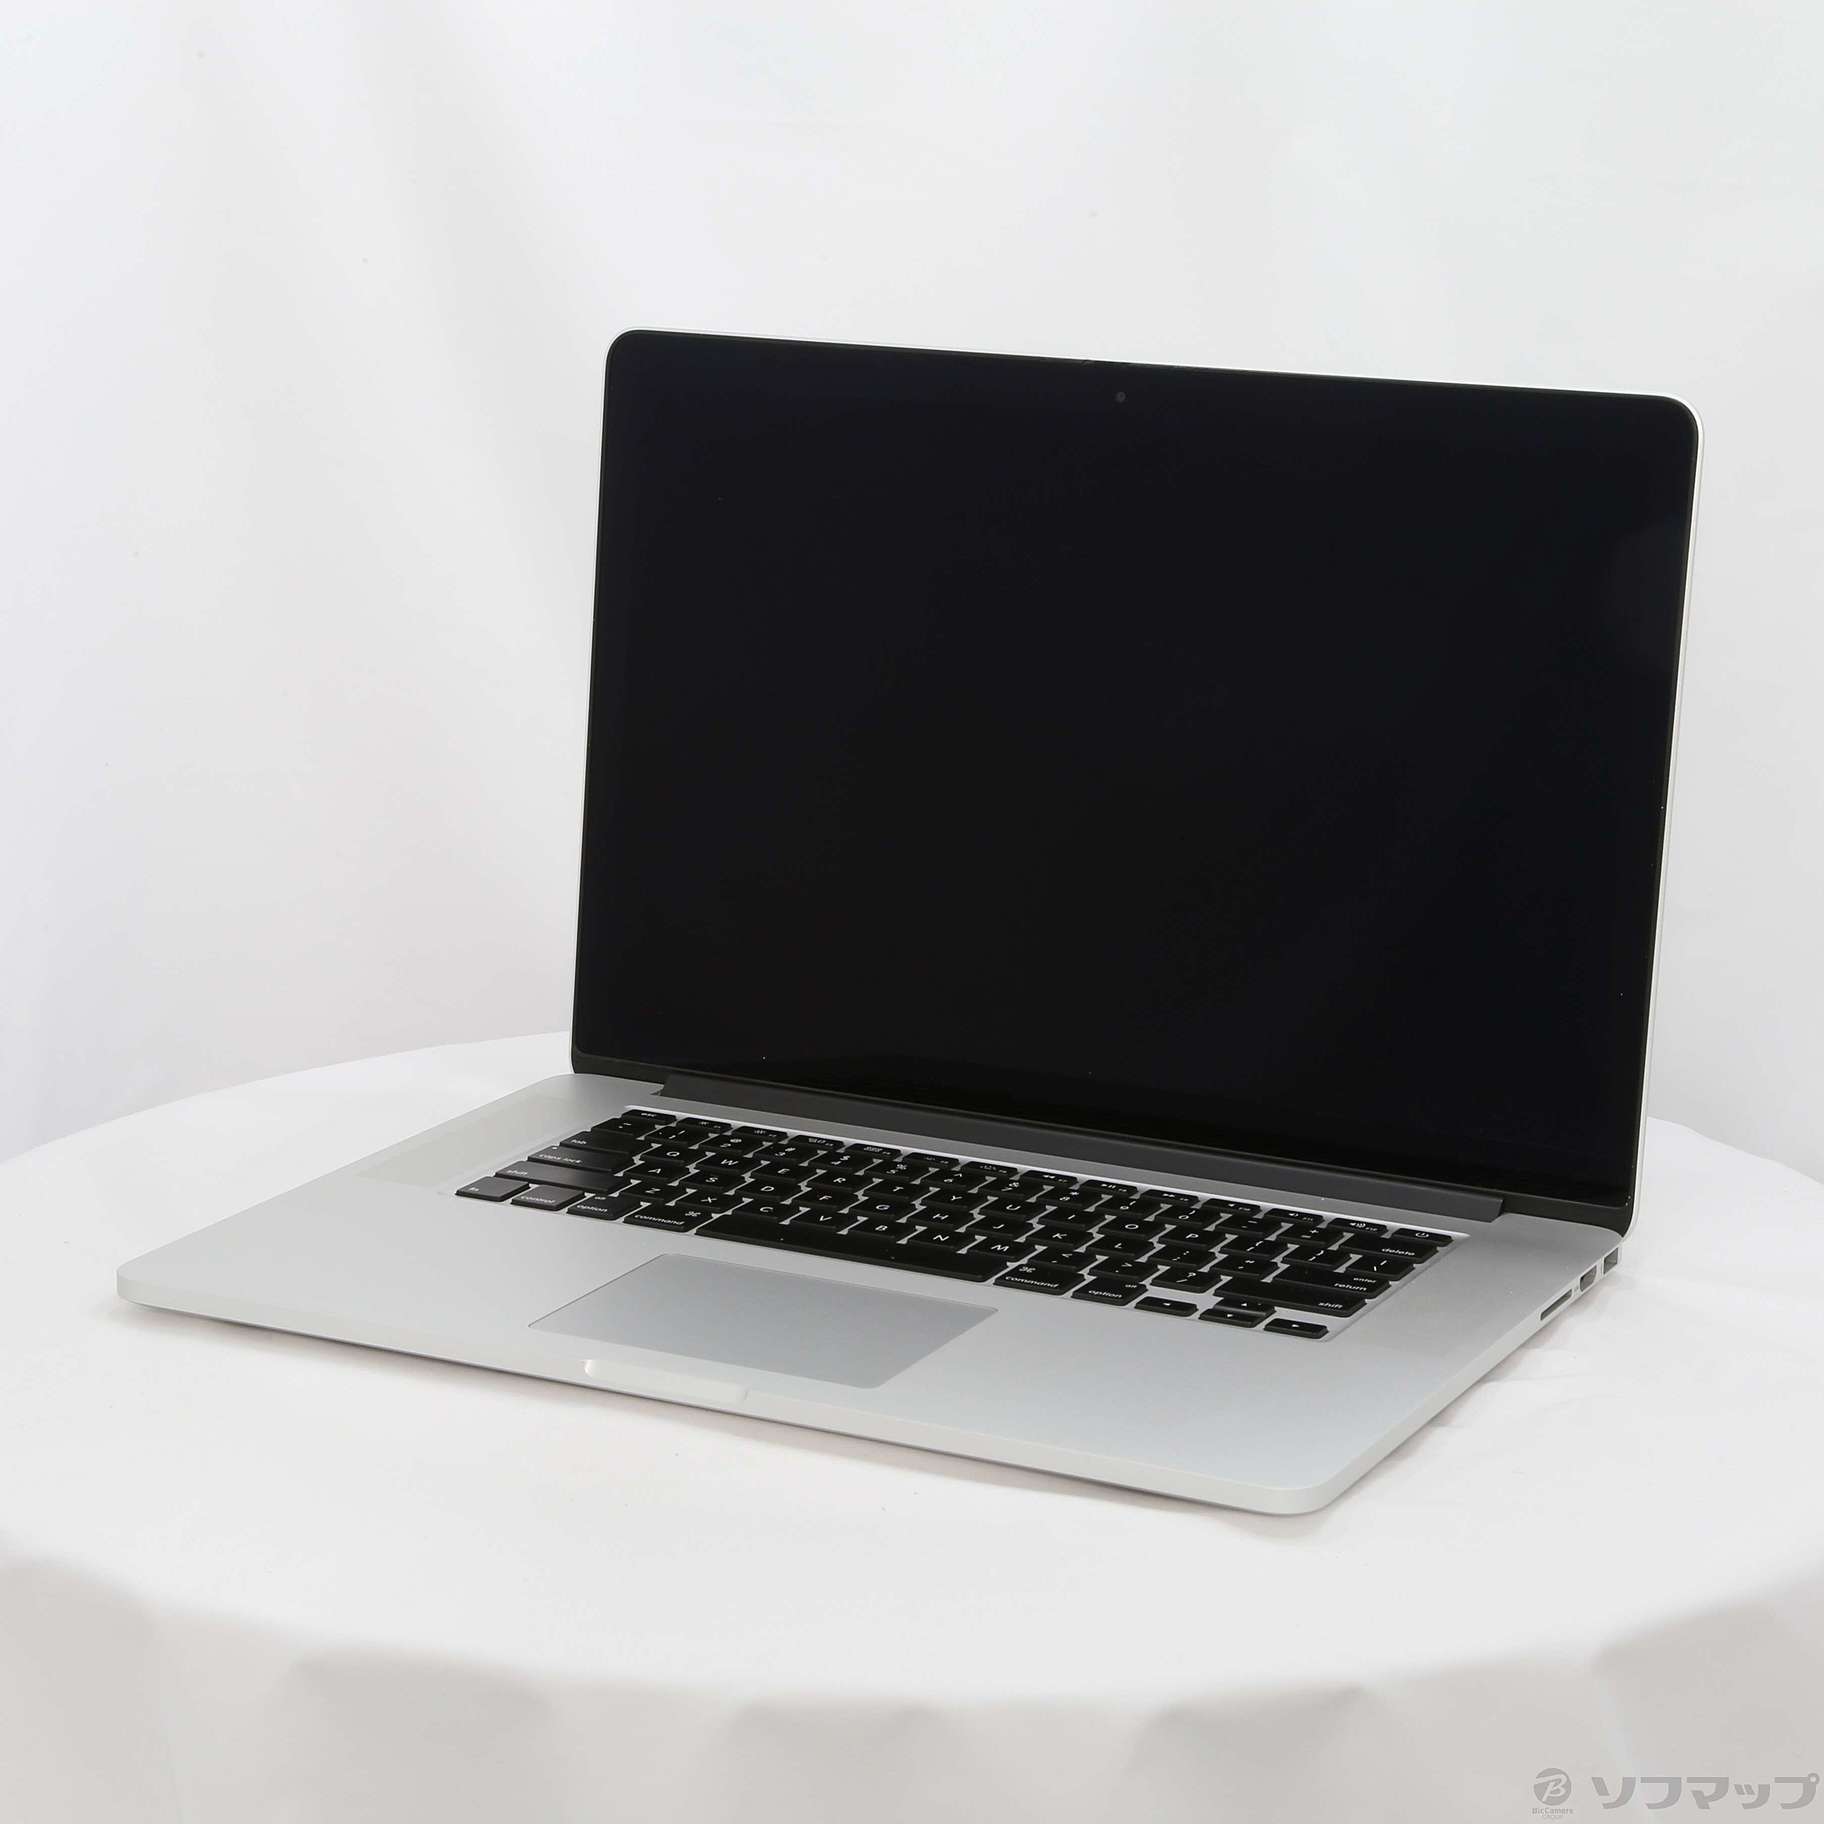 中古】セール対象品 MacBook Pro 15-inch Mid 2012 MC976J／A Core_i7 ...